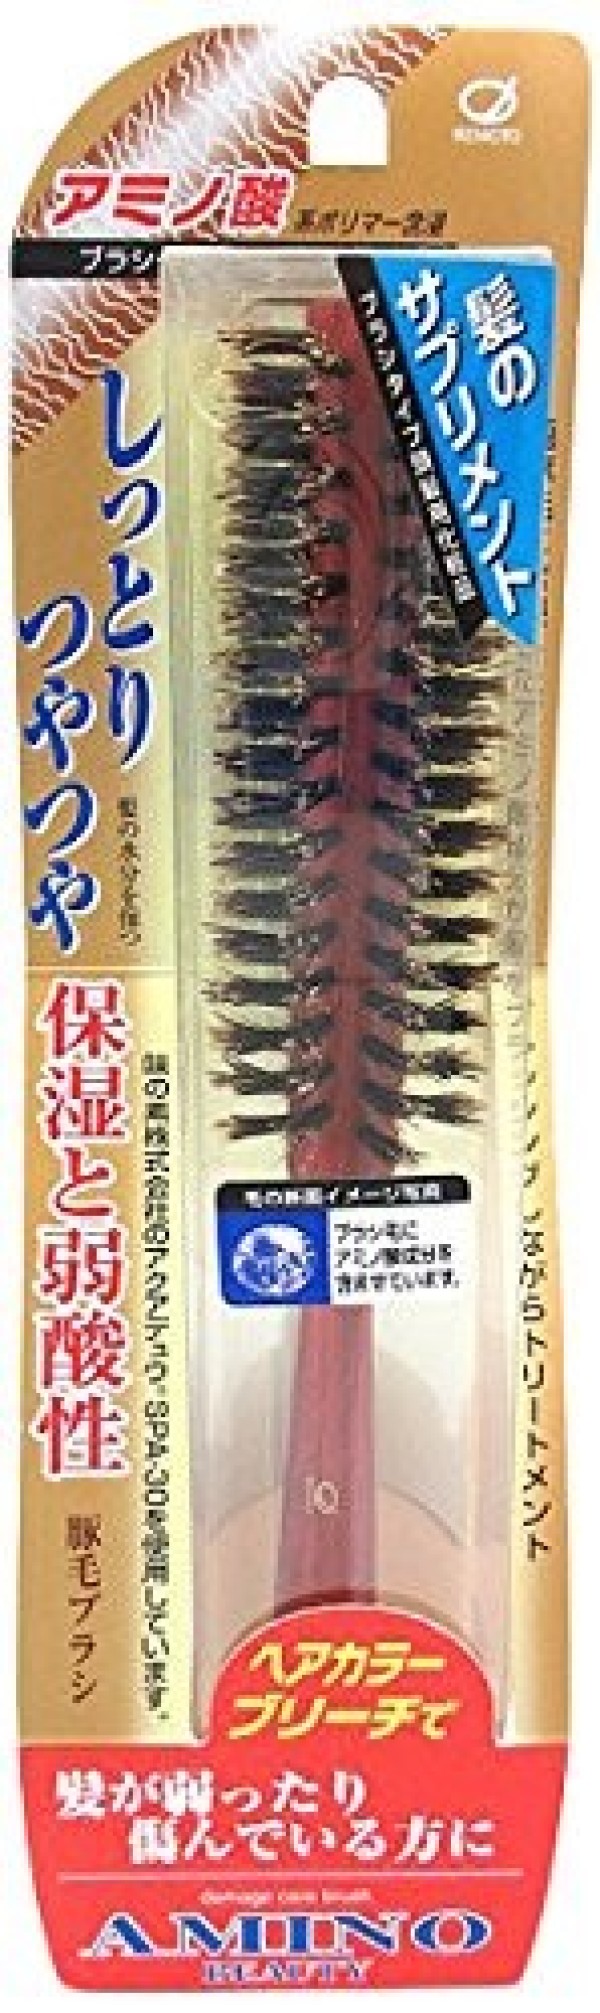 Щётка для волос Ikemoto Amino Beauty    